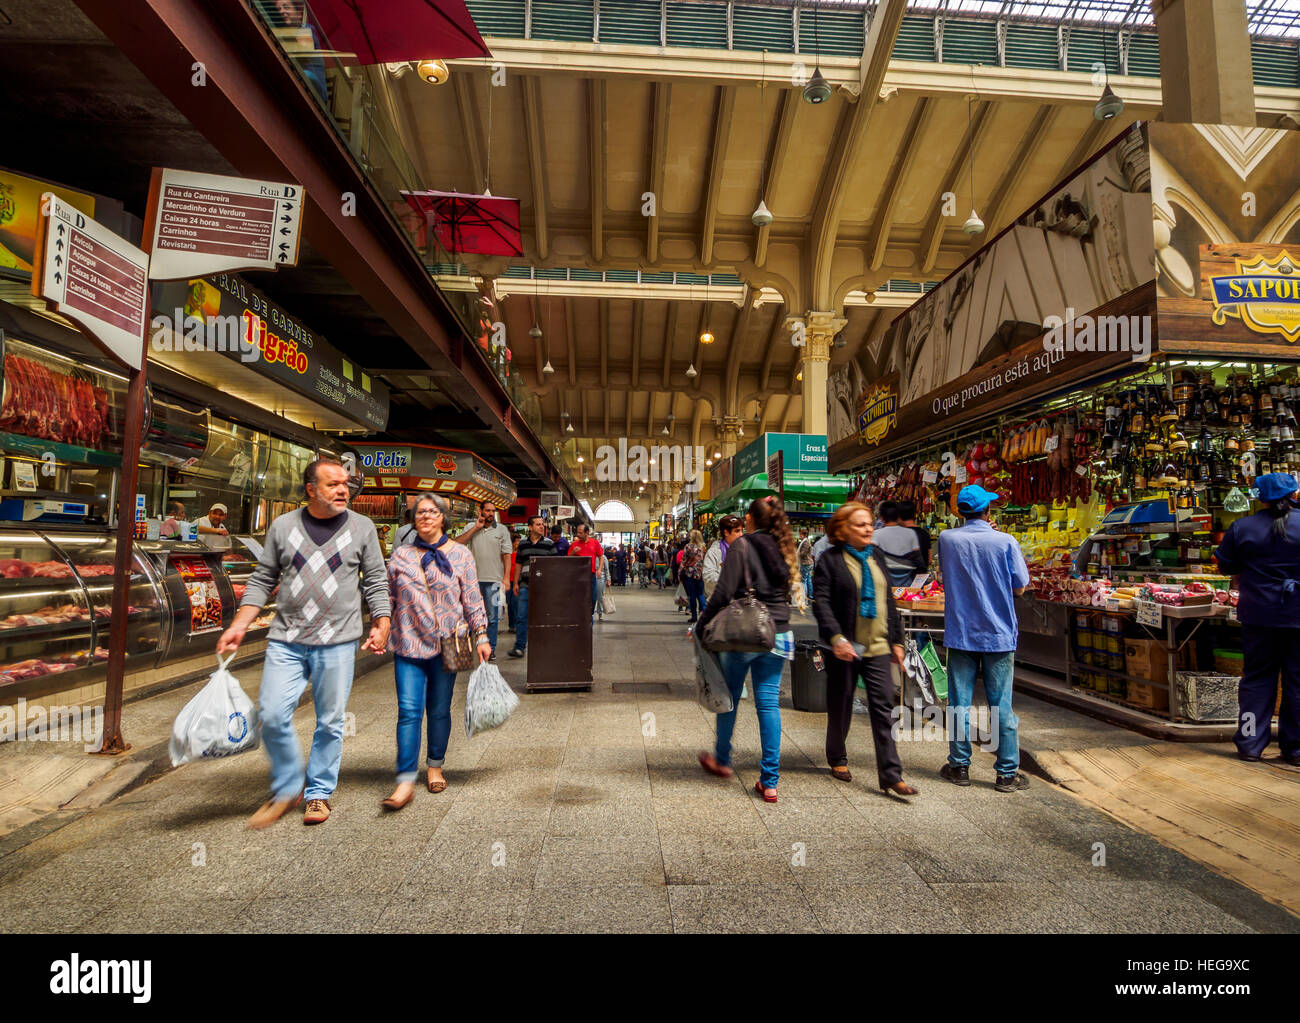 Brazil, State of Sao Paulo, City of Sao Paulo, Interior view of the Mercado Municipal. Stock Photo